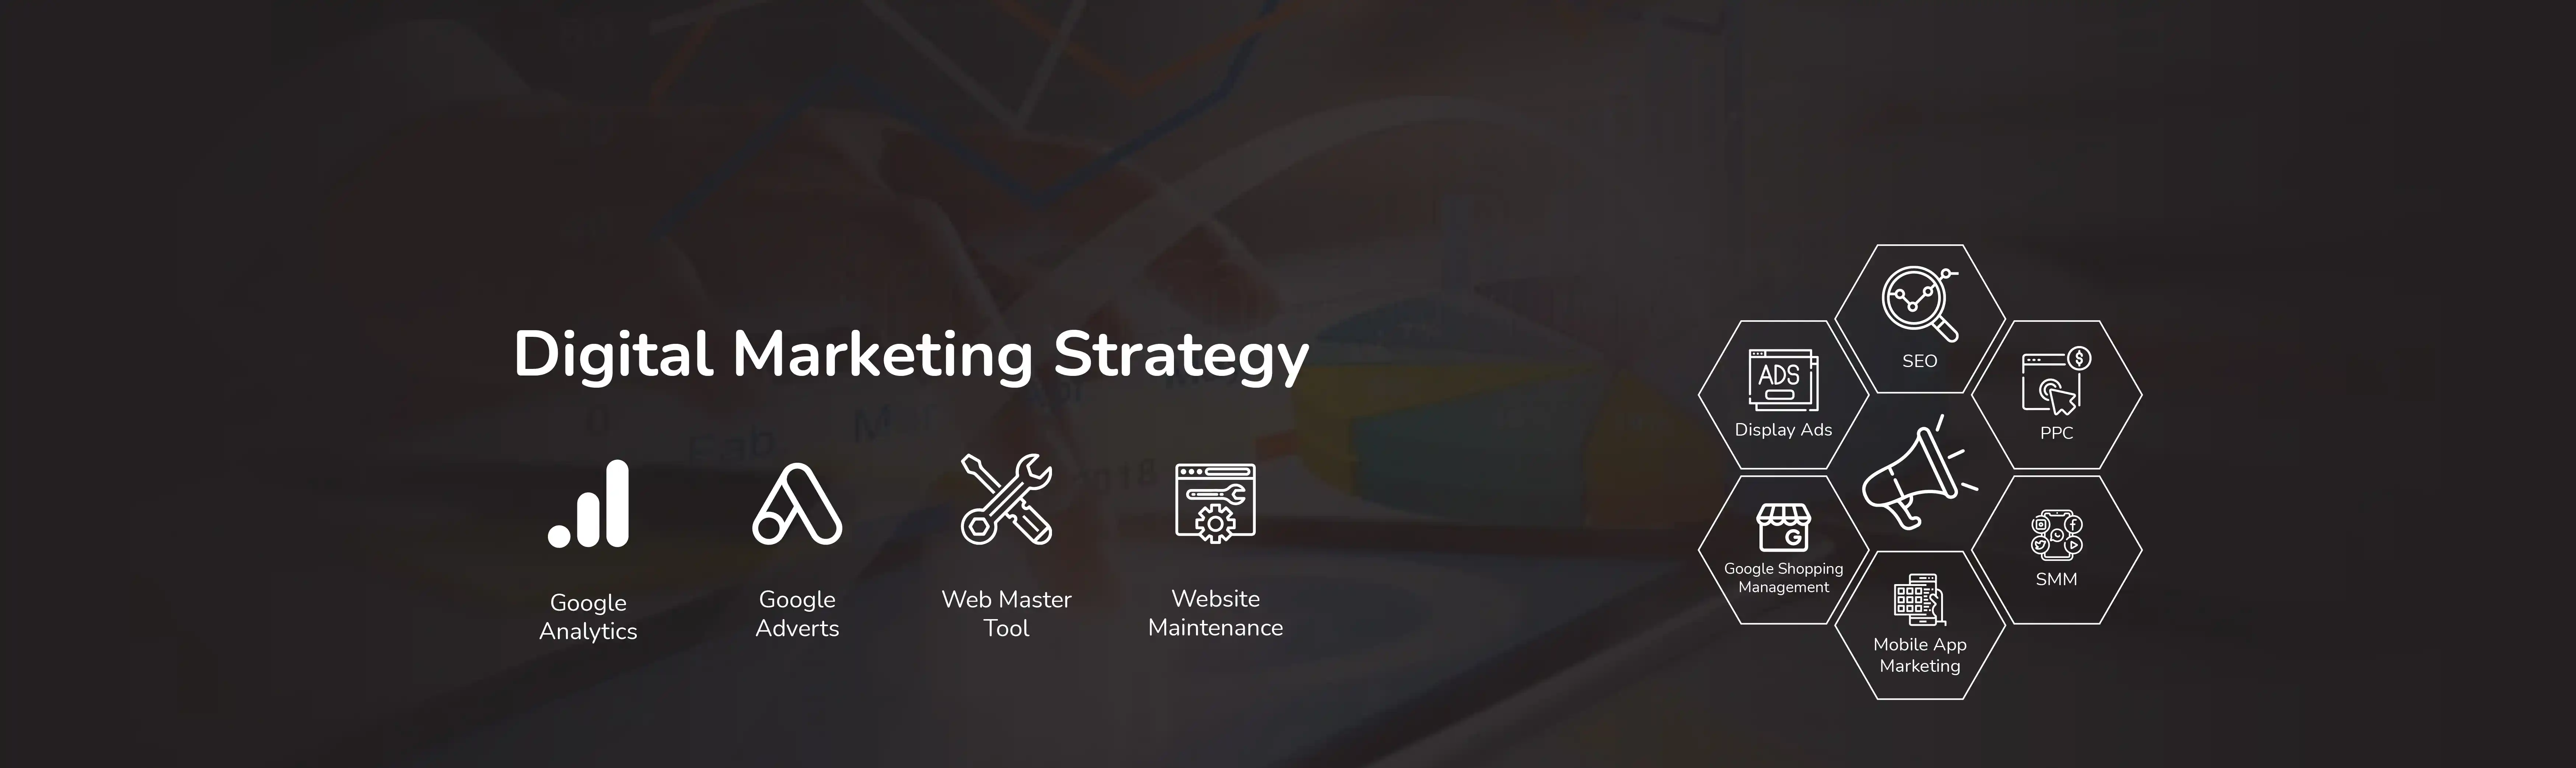 digital-marketing-strategy-home-banner.webp